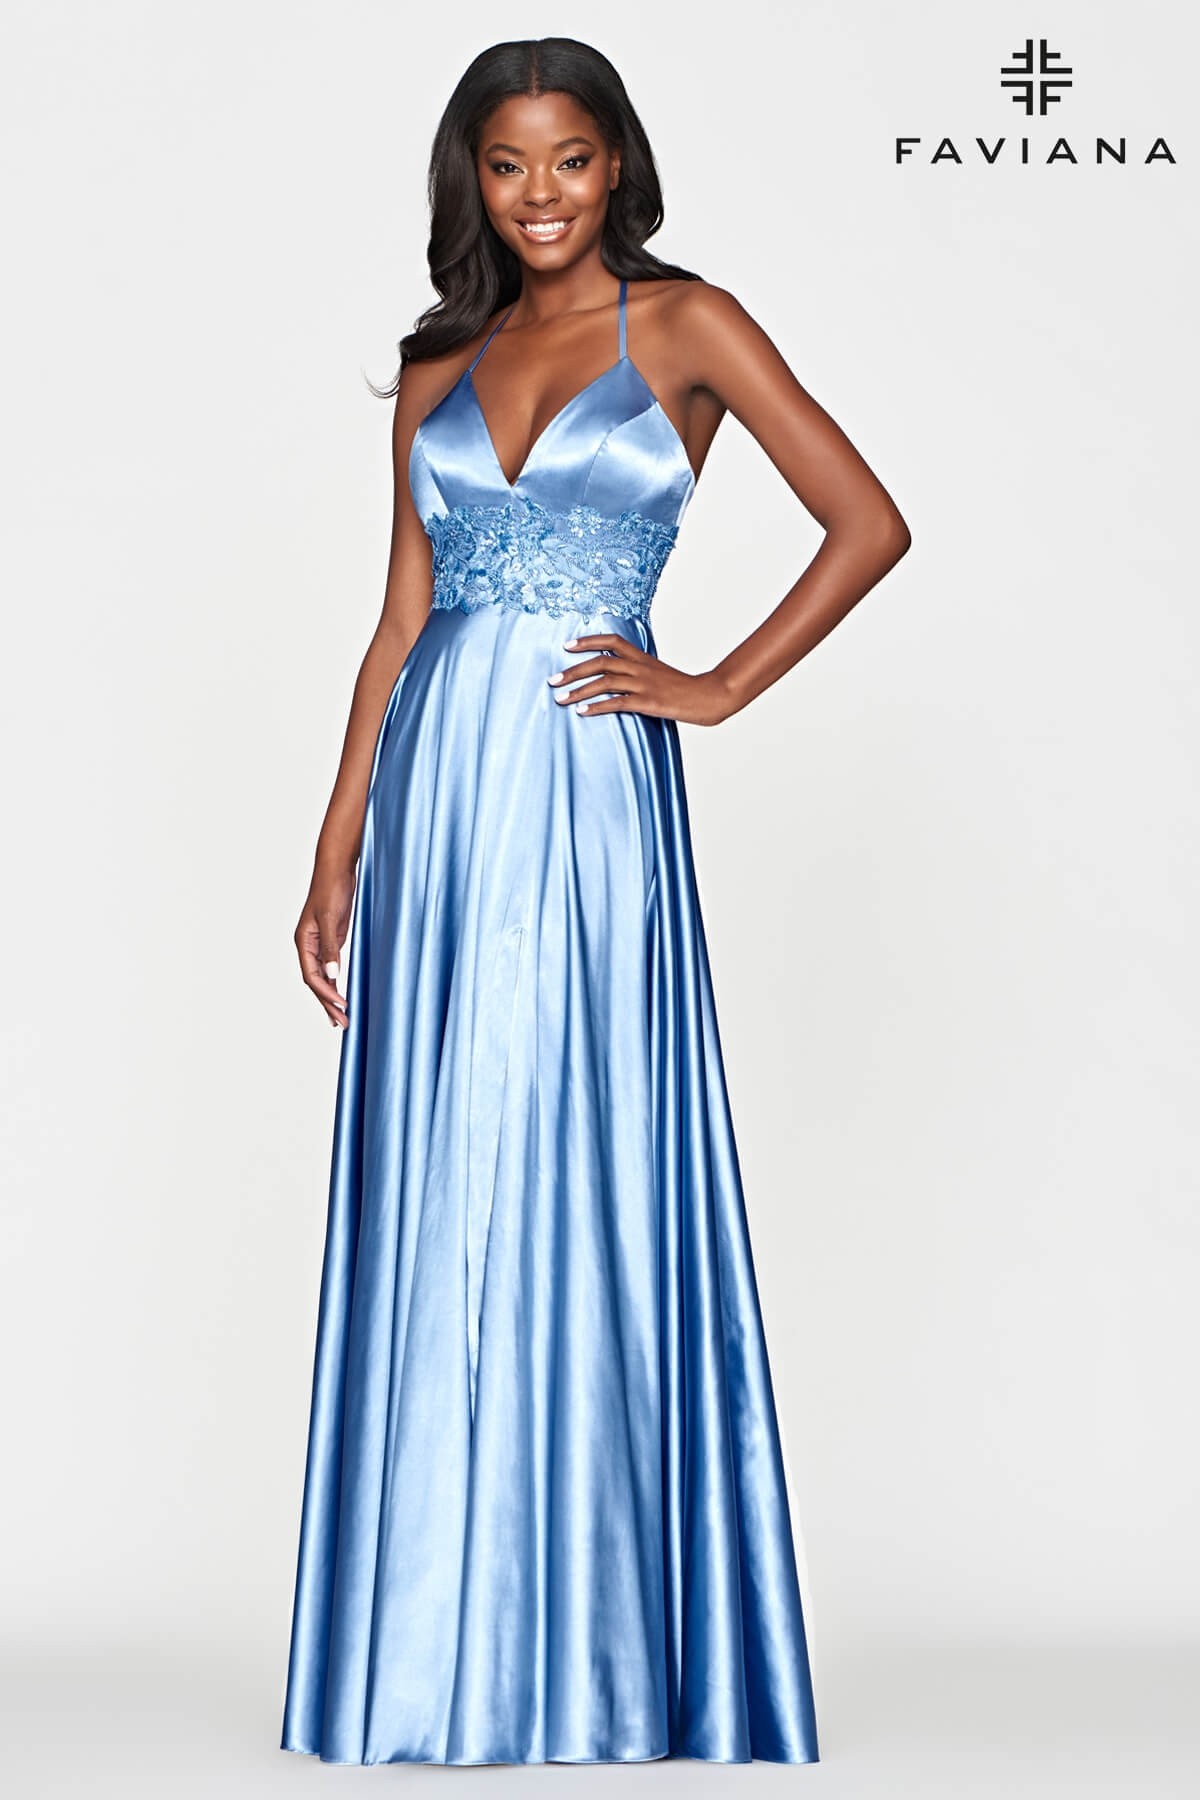 Faviana S10643 Prom Dress